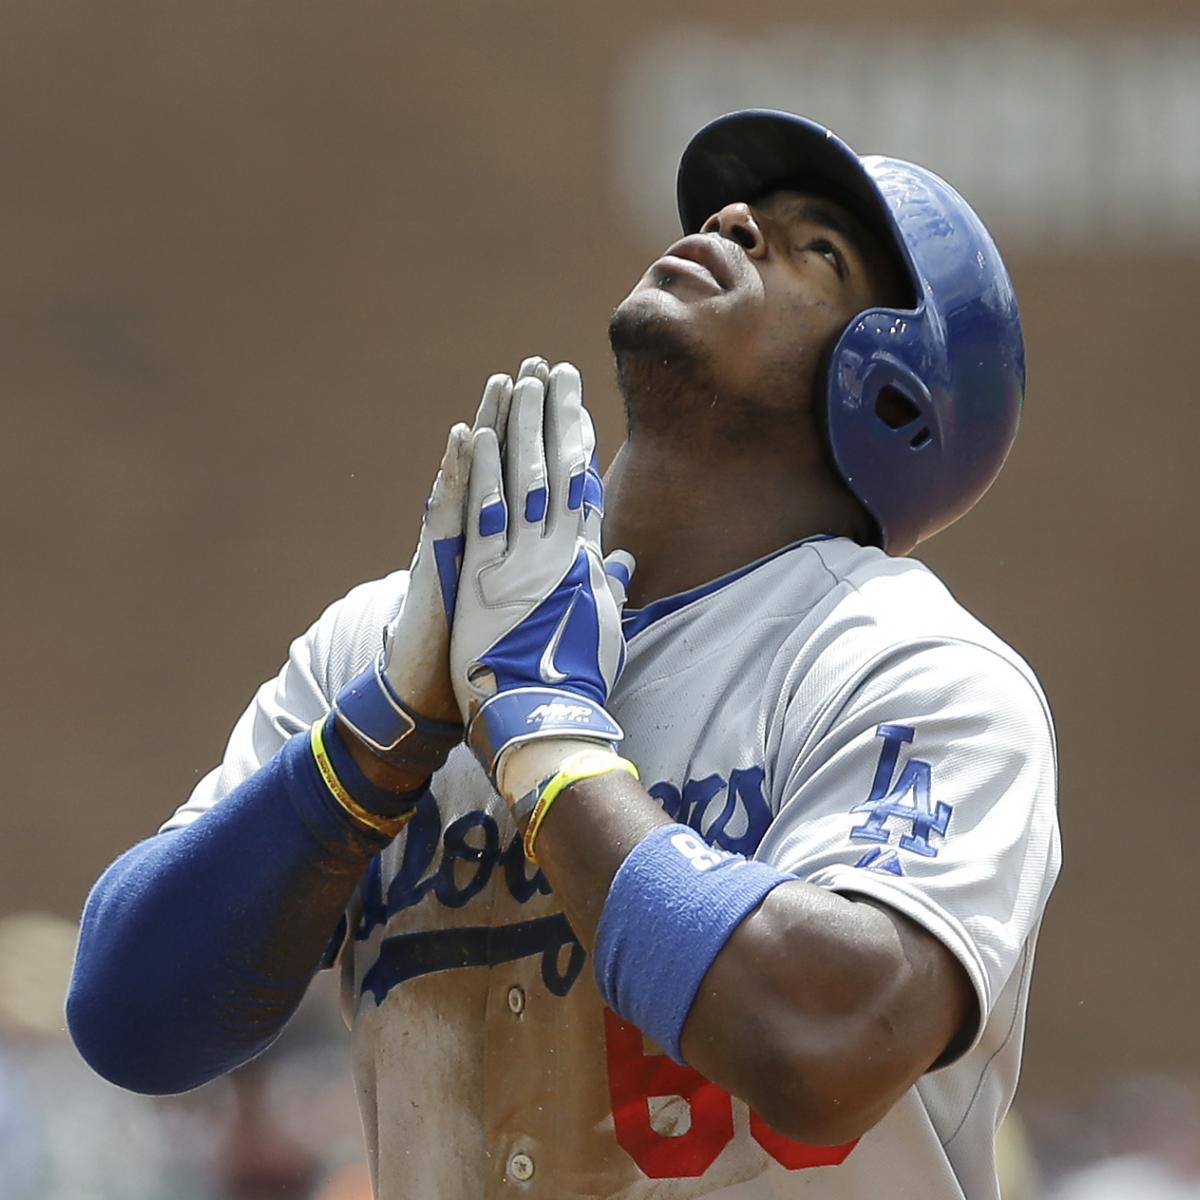 No sophomore slump for Dodgers' Yasiel Puig